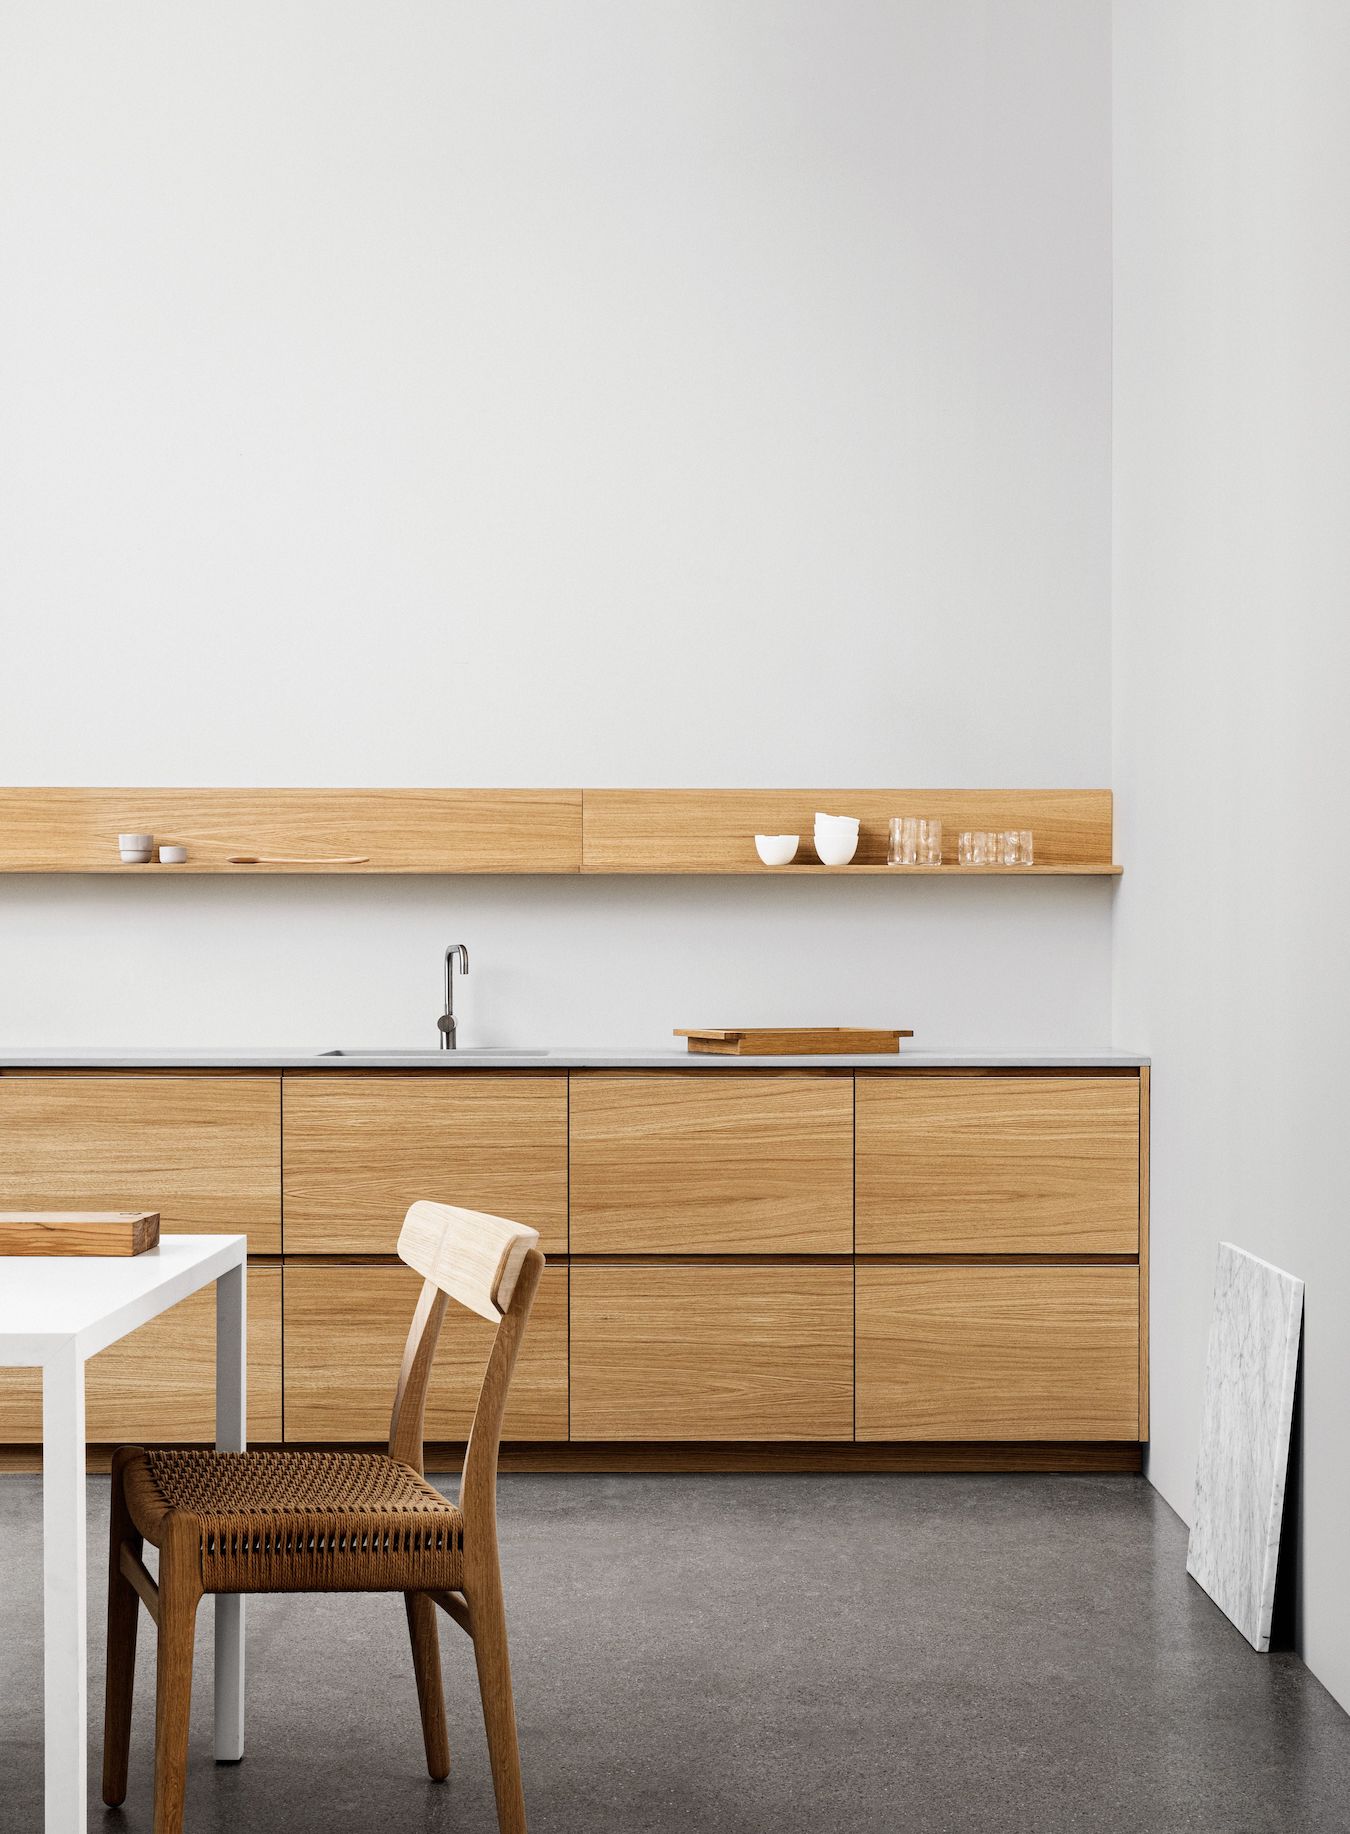 Profile Transforms IKEA Cabinets into a Minimalist Kitchen